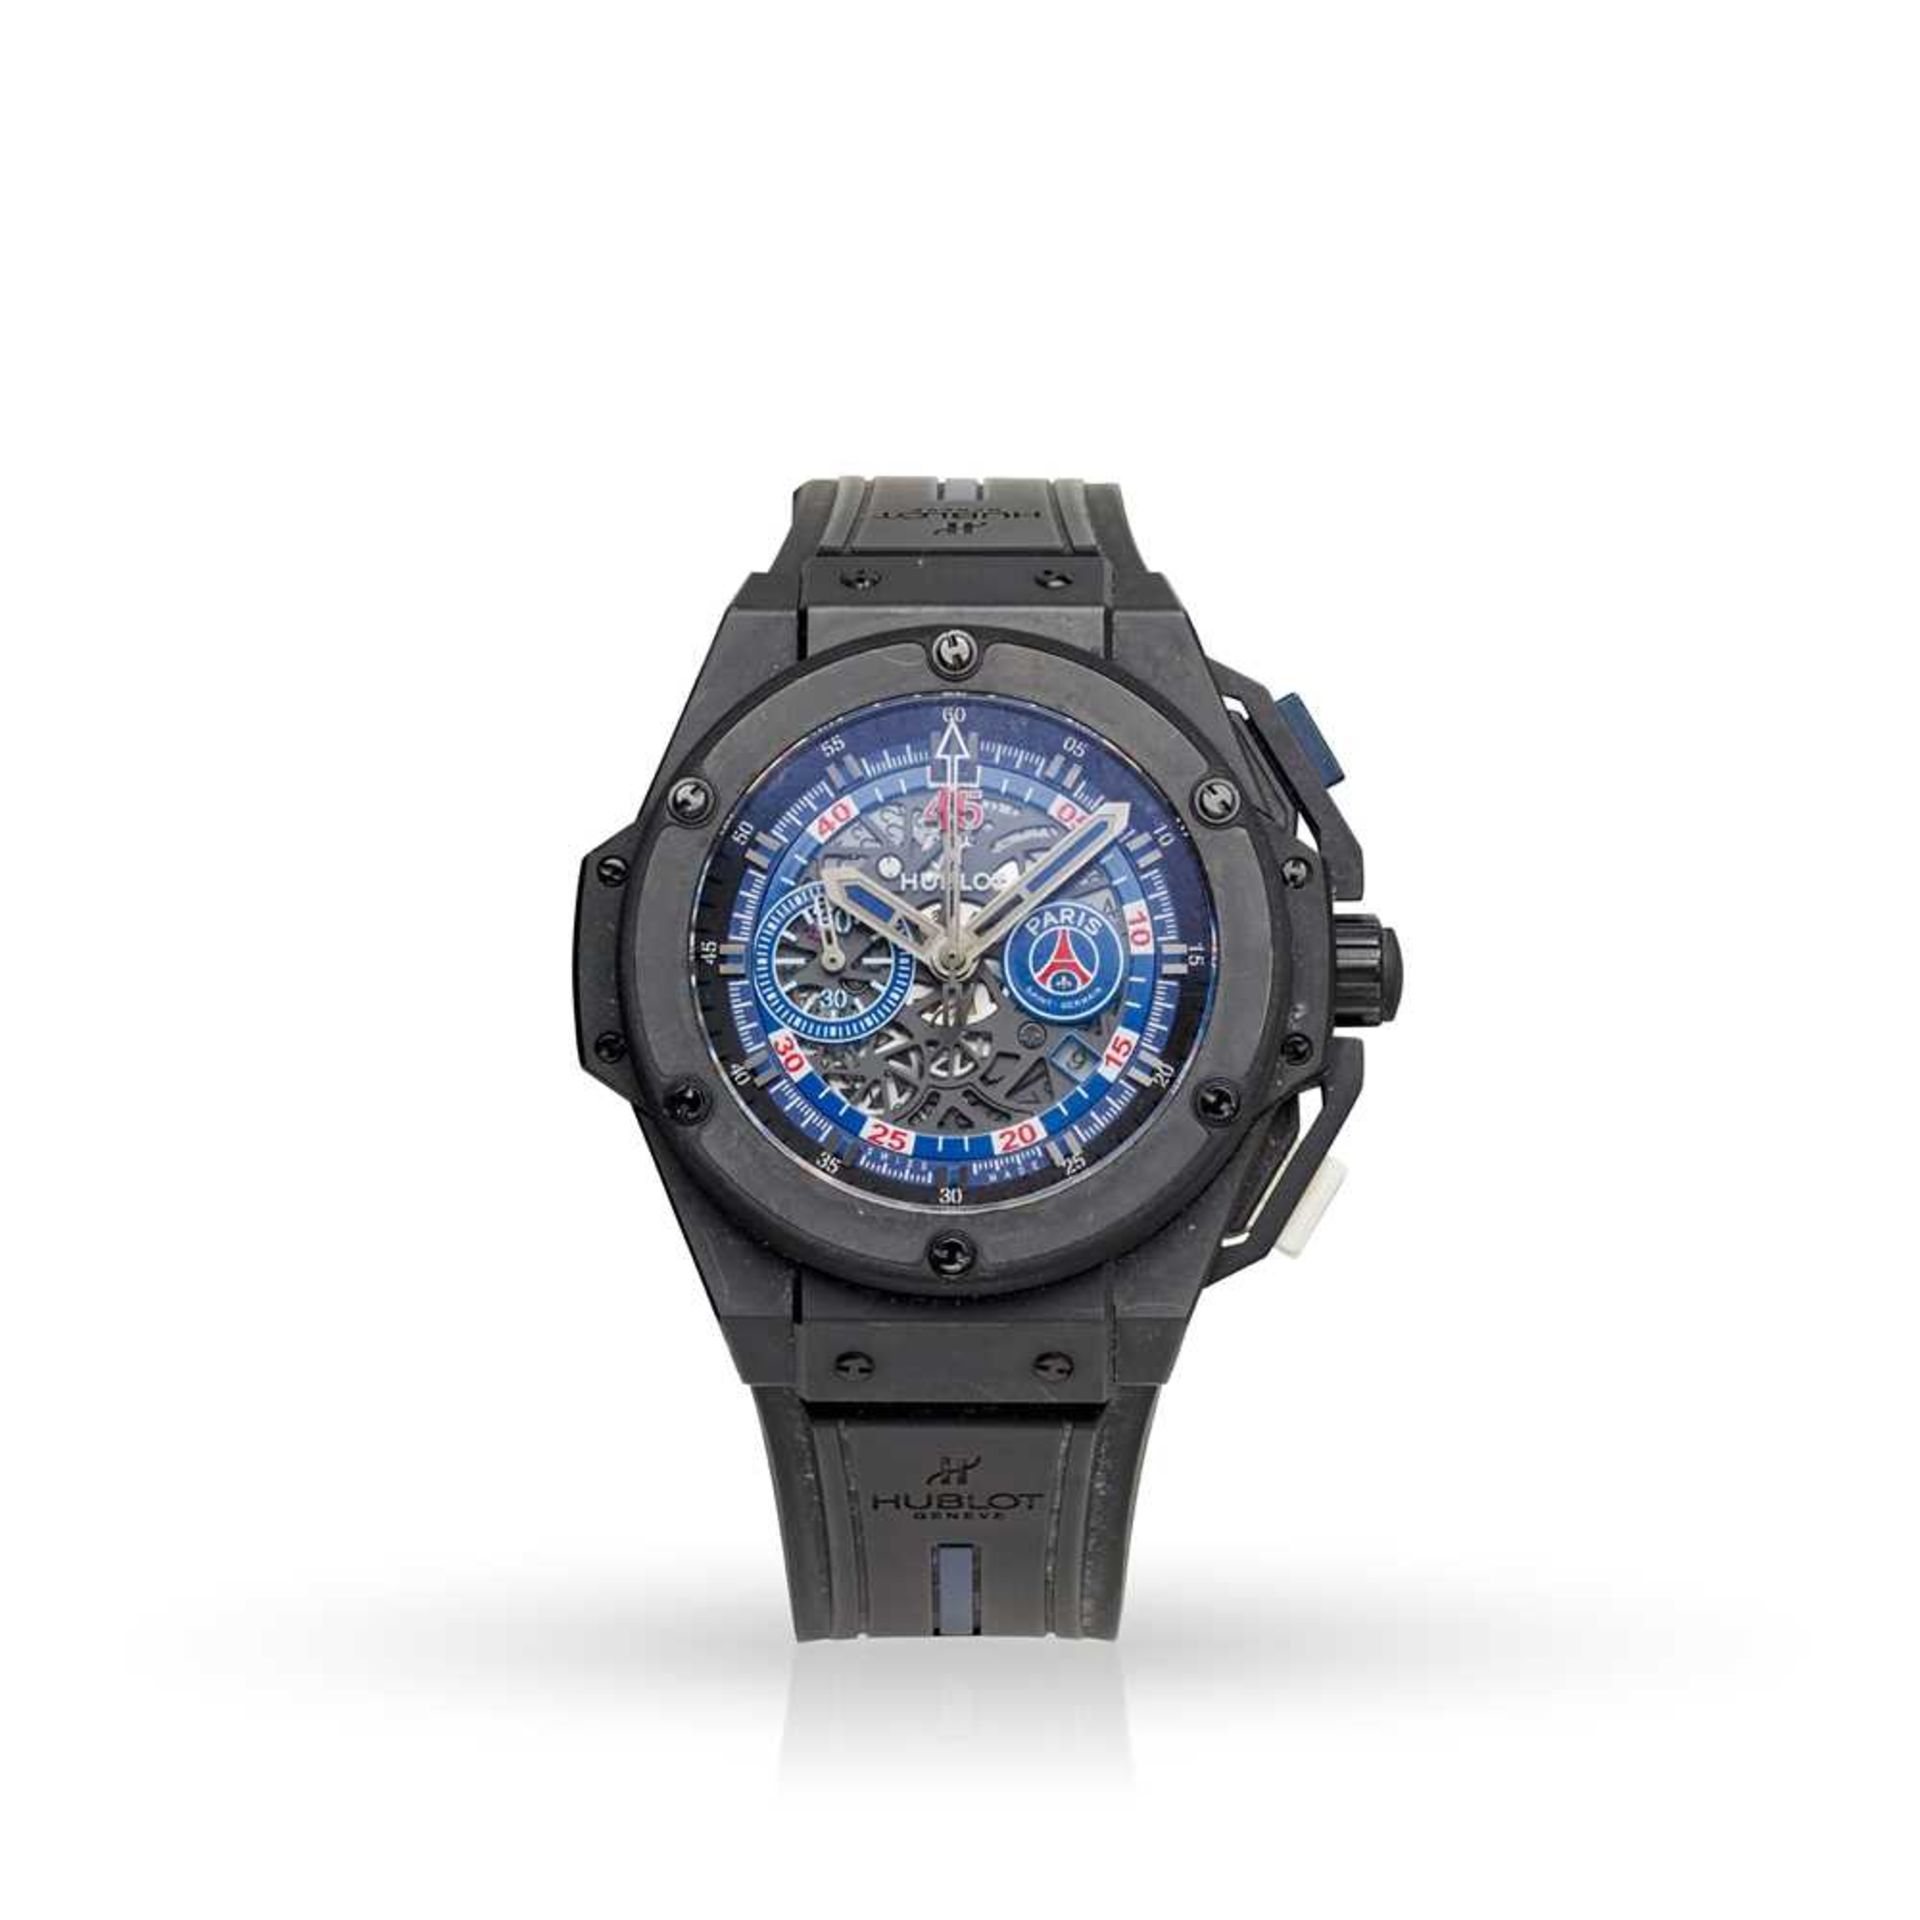 Hublot: a limited edition wrist watch